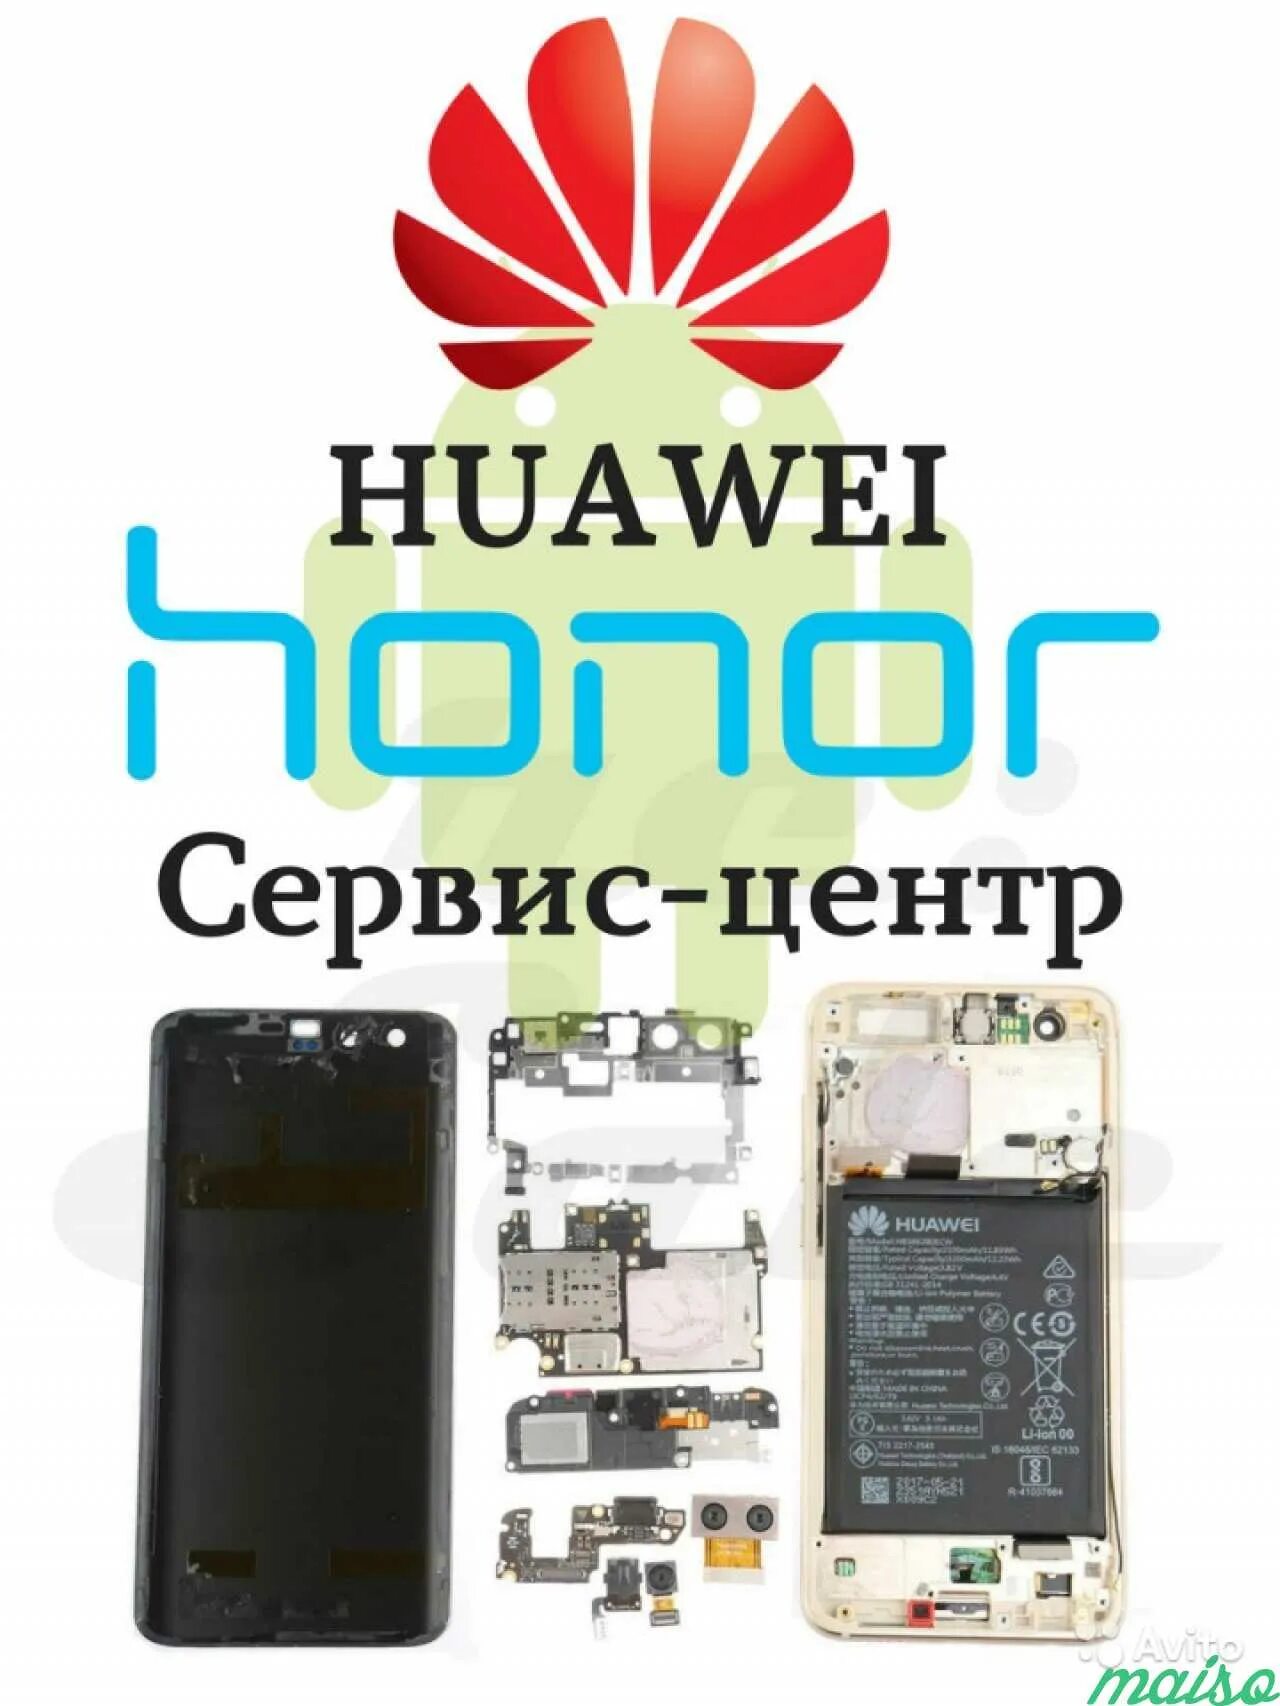 Телефон huawei сервисный центр. Сервисный центр Хуавей. Сервисный центр Honor. Сервис Huawei. Huawei Honor сервисный центр.